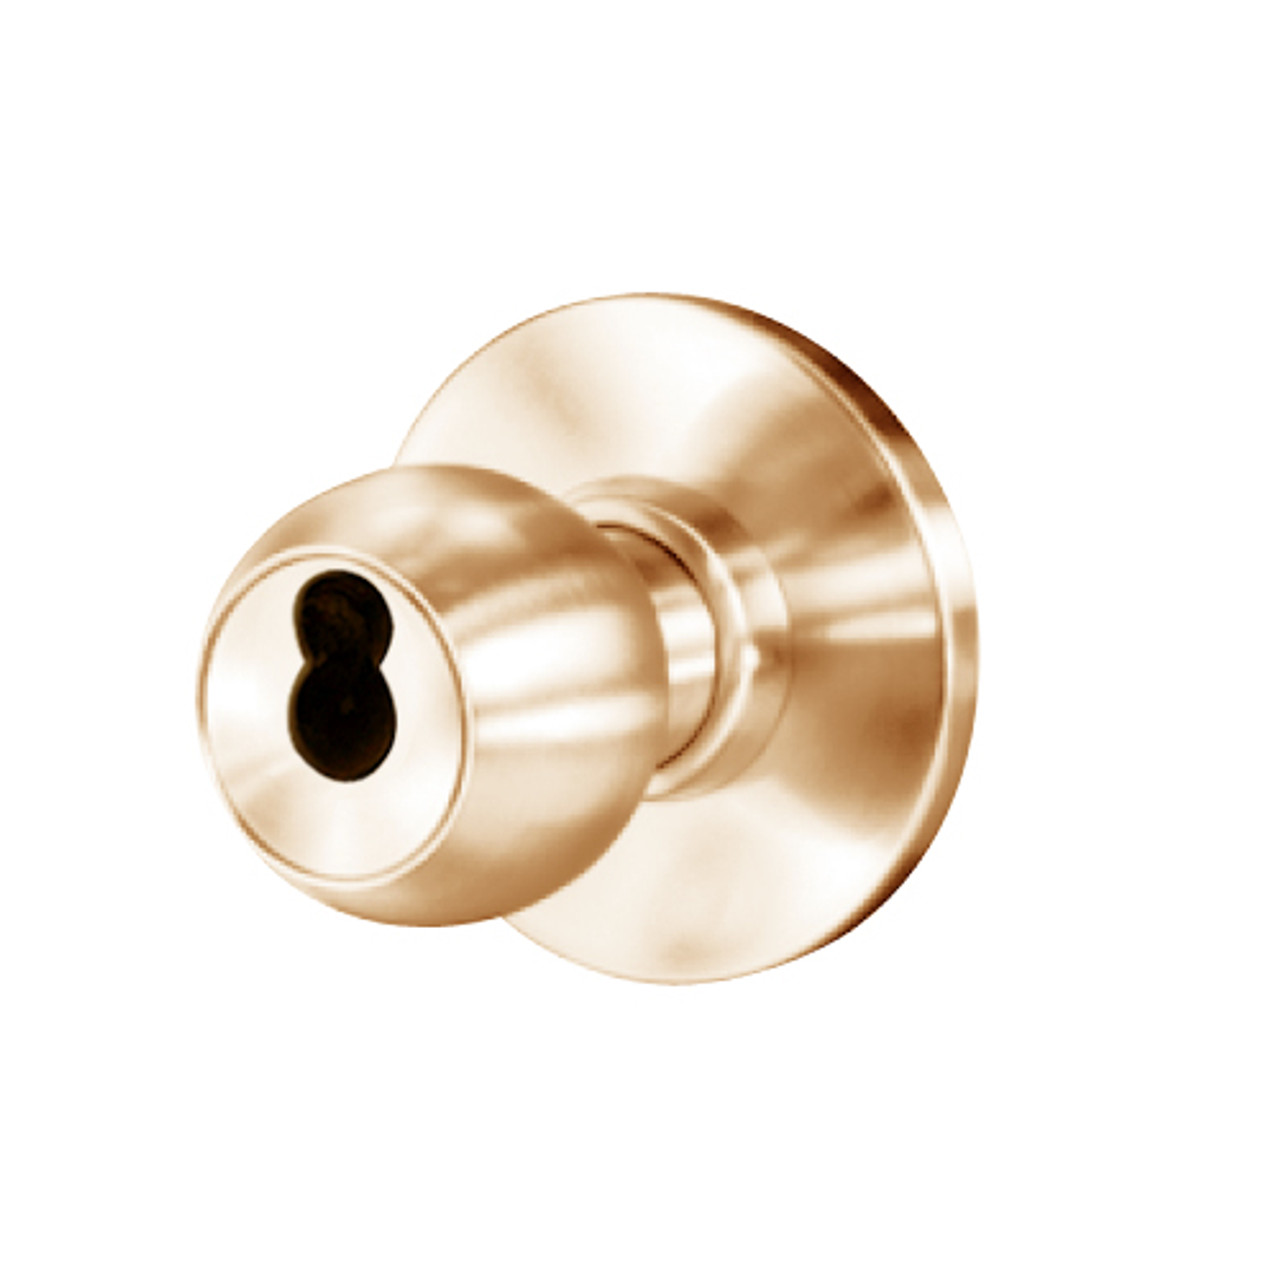 8K57YD4ASTK611 Best 8K Series Exit Heavy Duty Cylindrical Knob Locks with Round Style in Bright Bronze